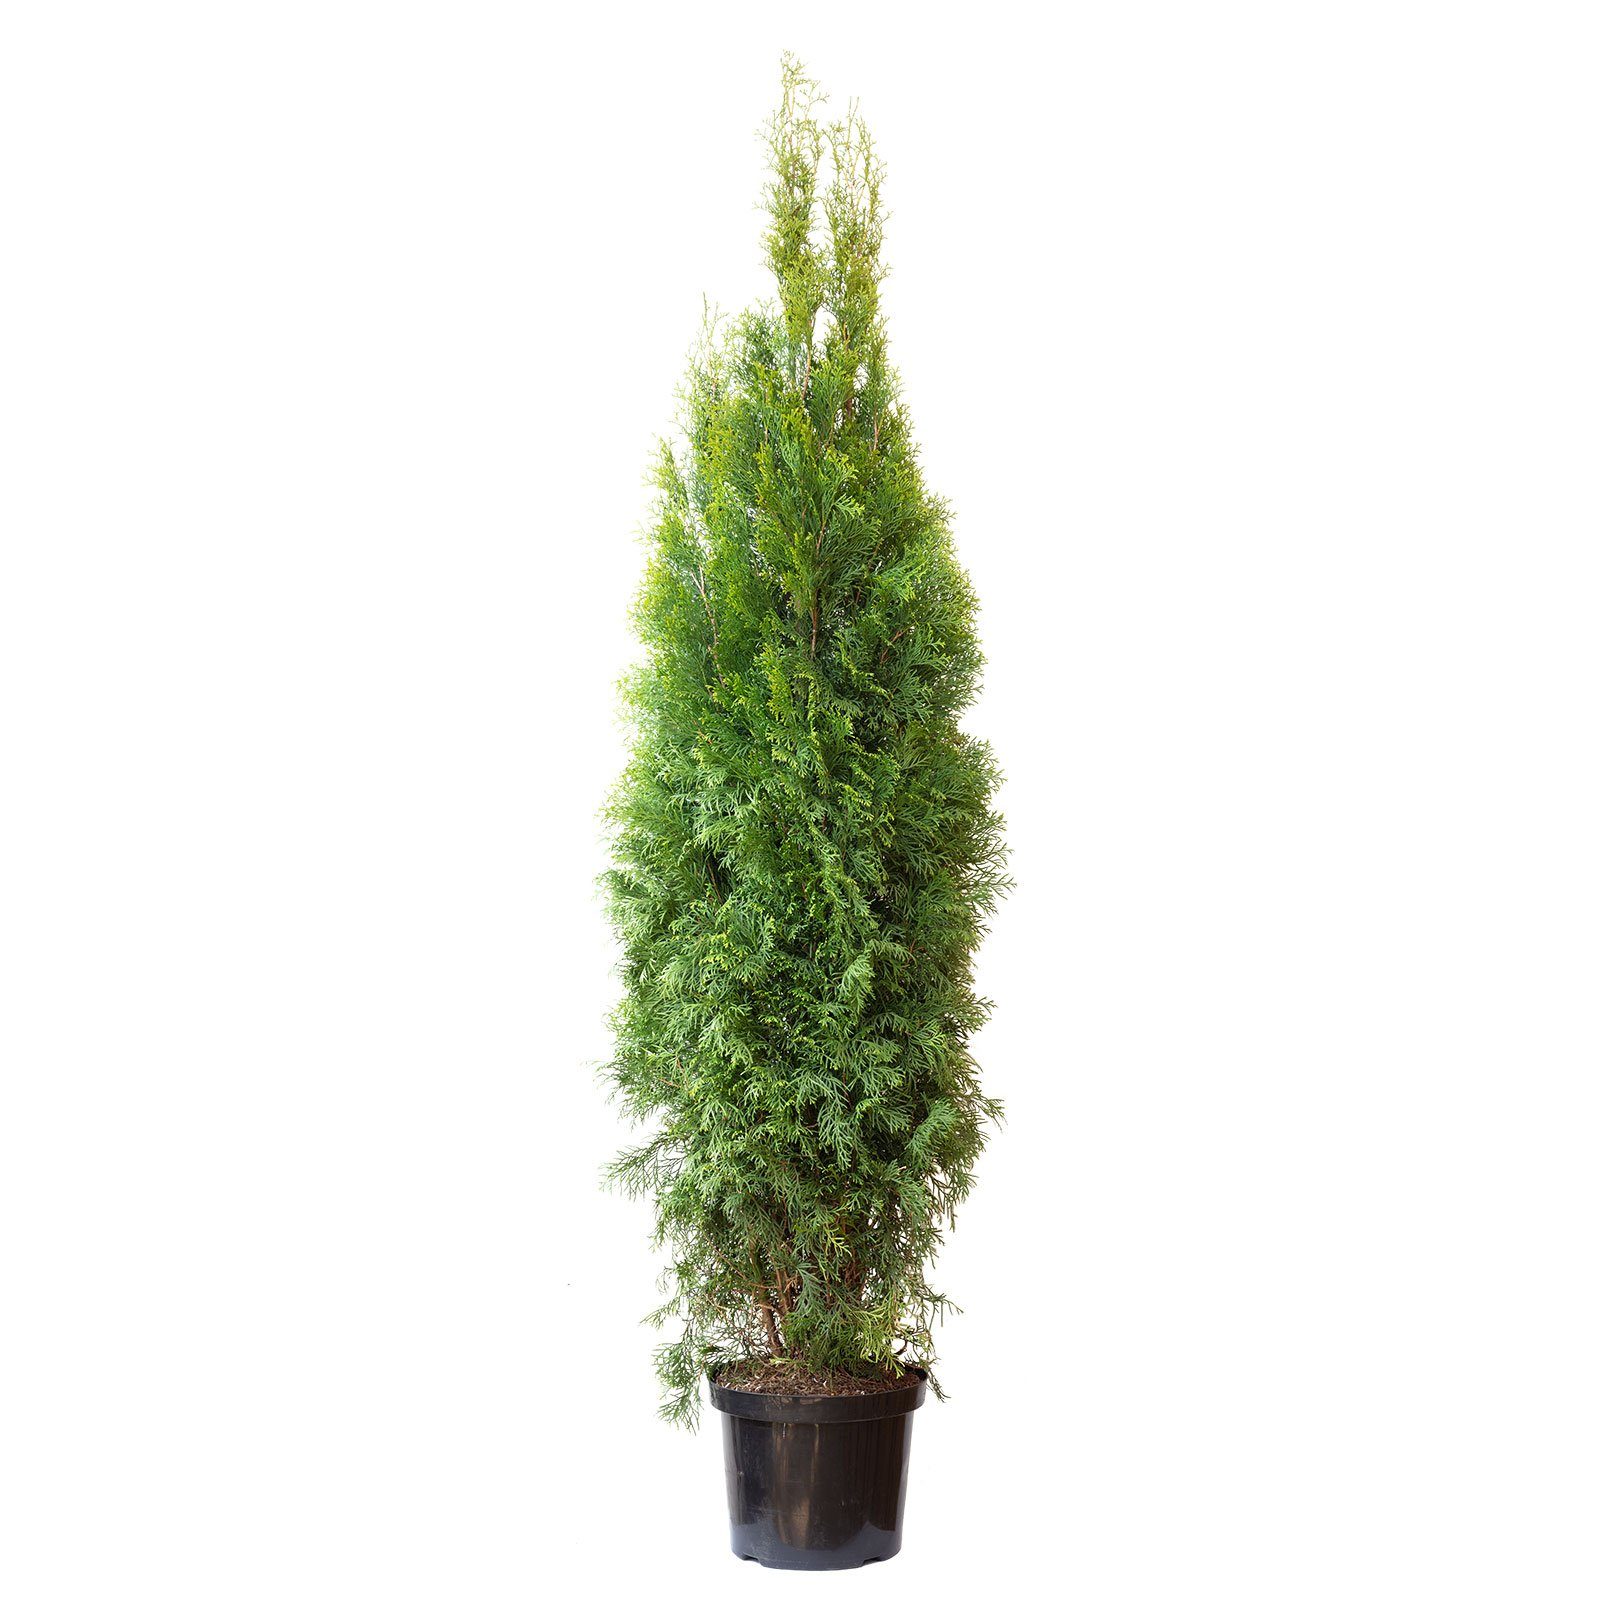 Flowerbox Blumentopf bepflanzt mit Heckenpflanze Lebensbaum "Smaragd" C10 -  Thuja occidentalis smaragd - Höhe ca. 140-160 cm